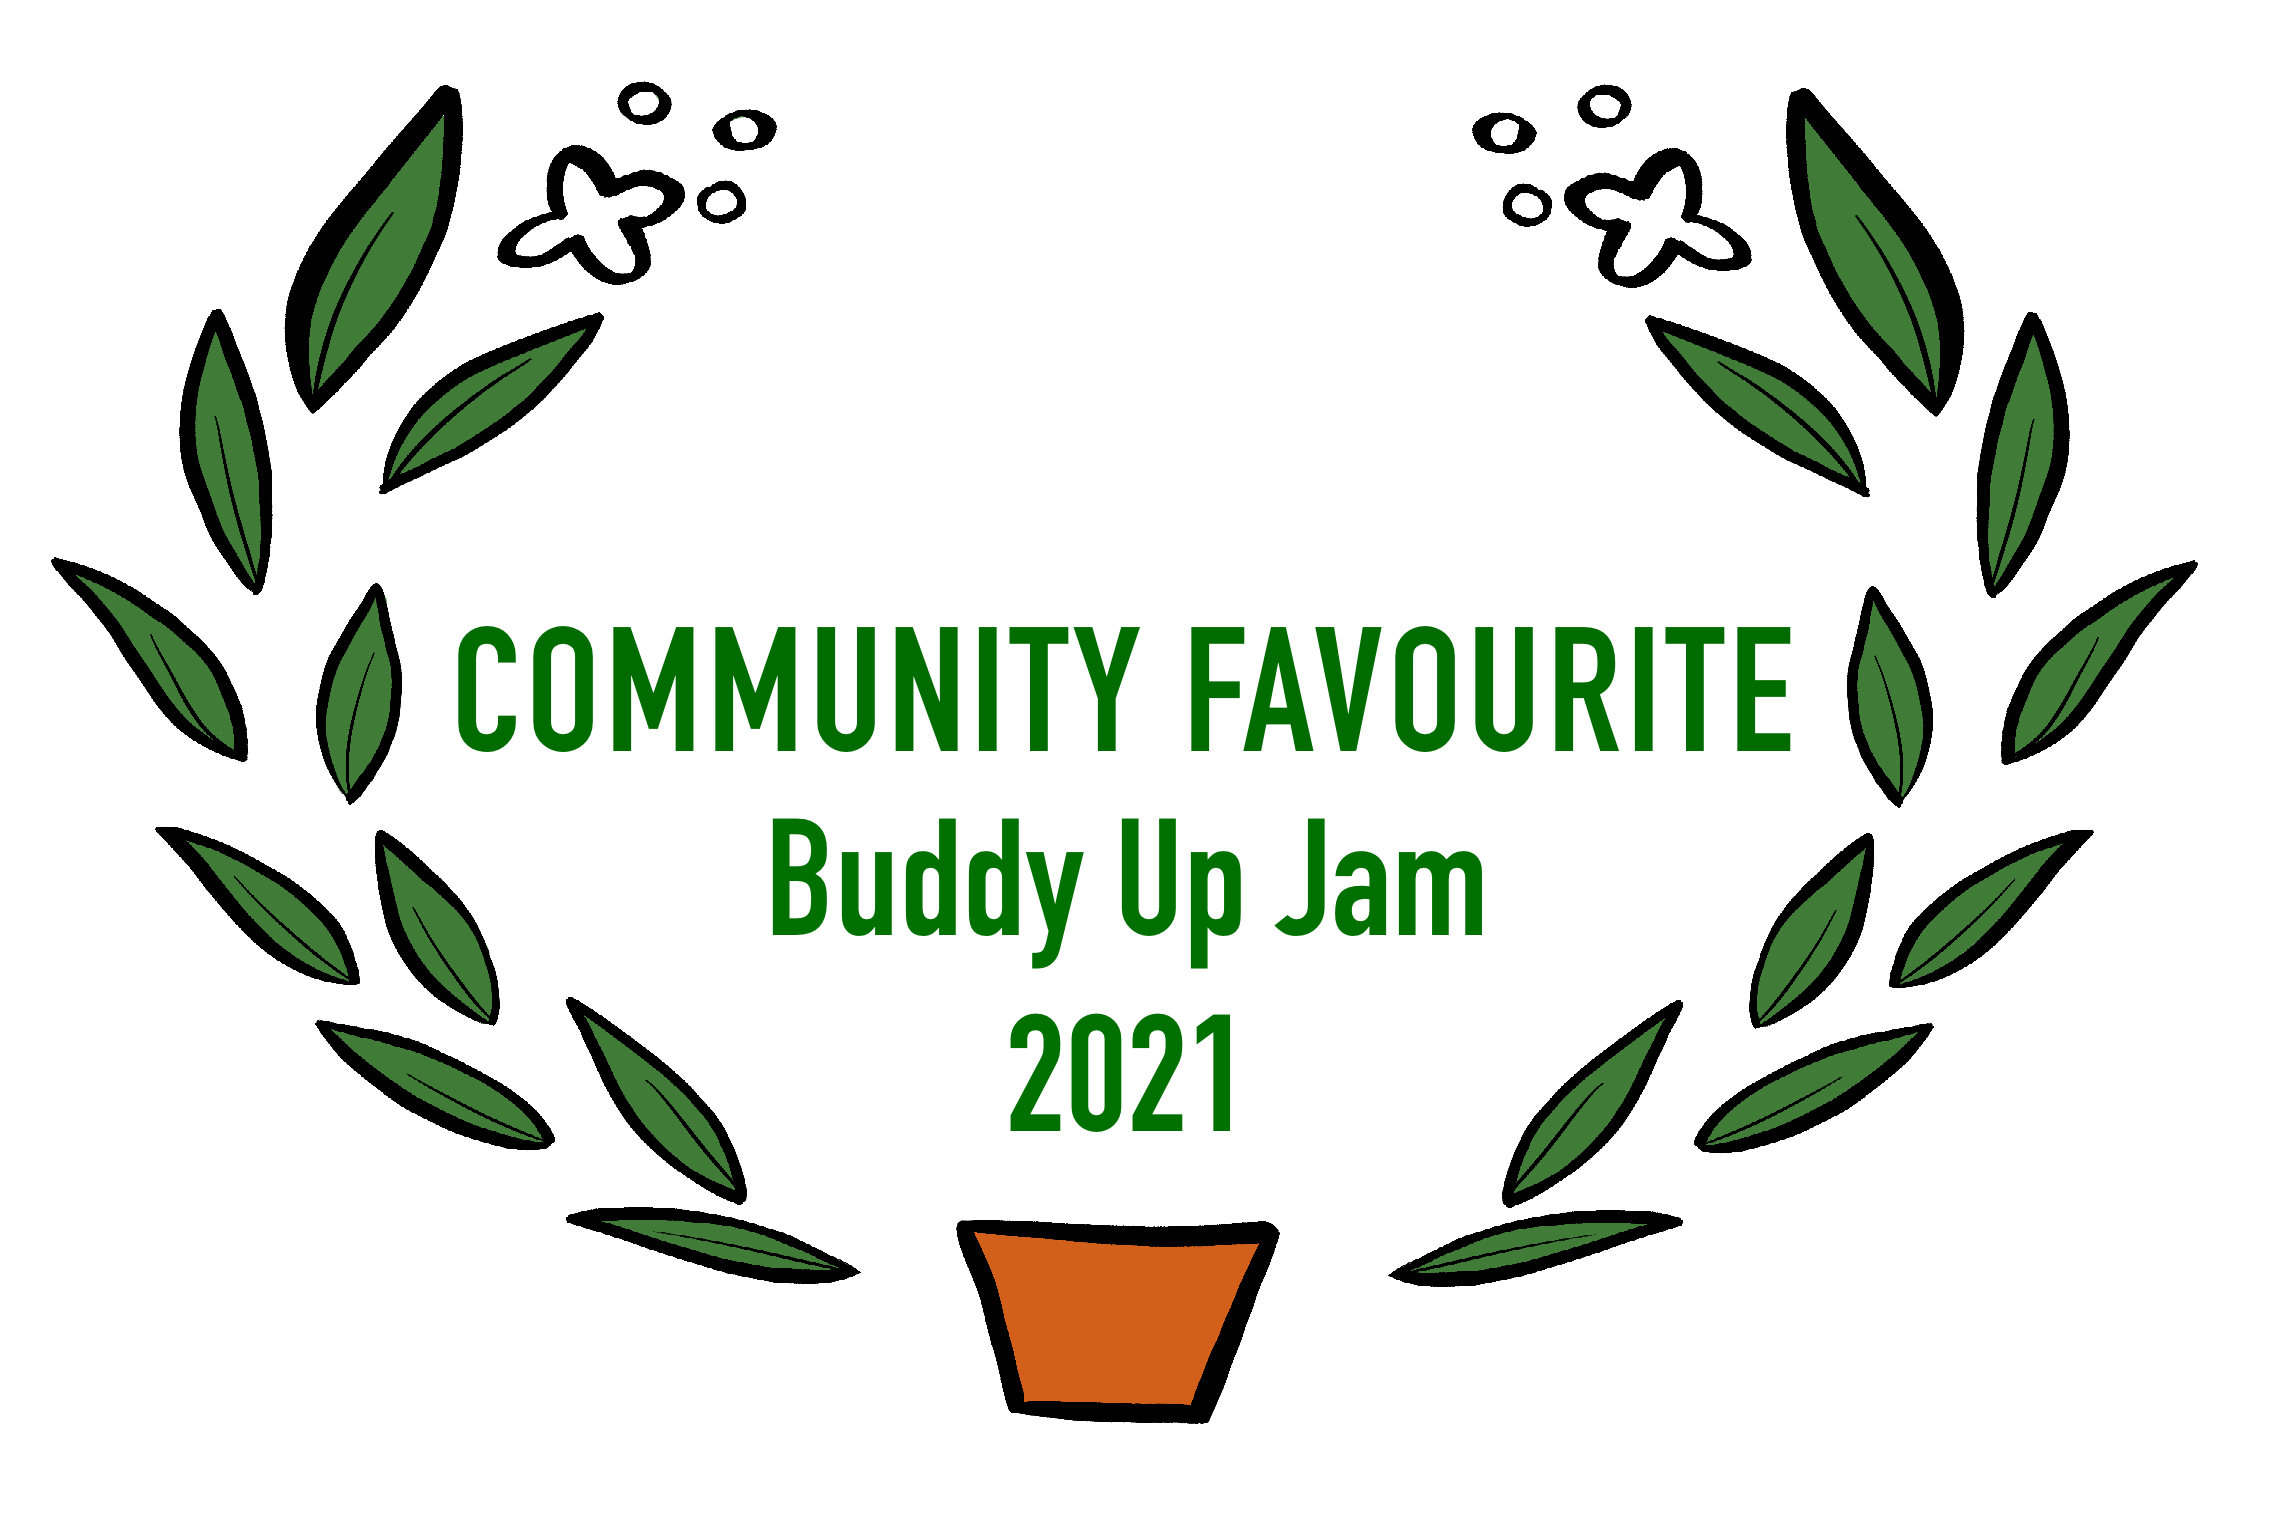 Buddy Up Jam 2021 Community Favourite